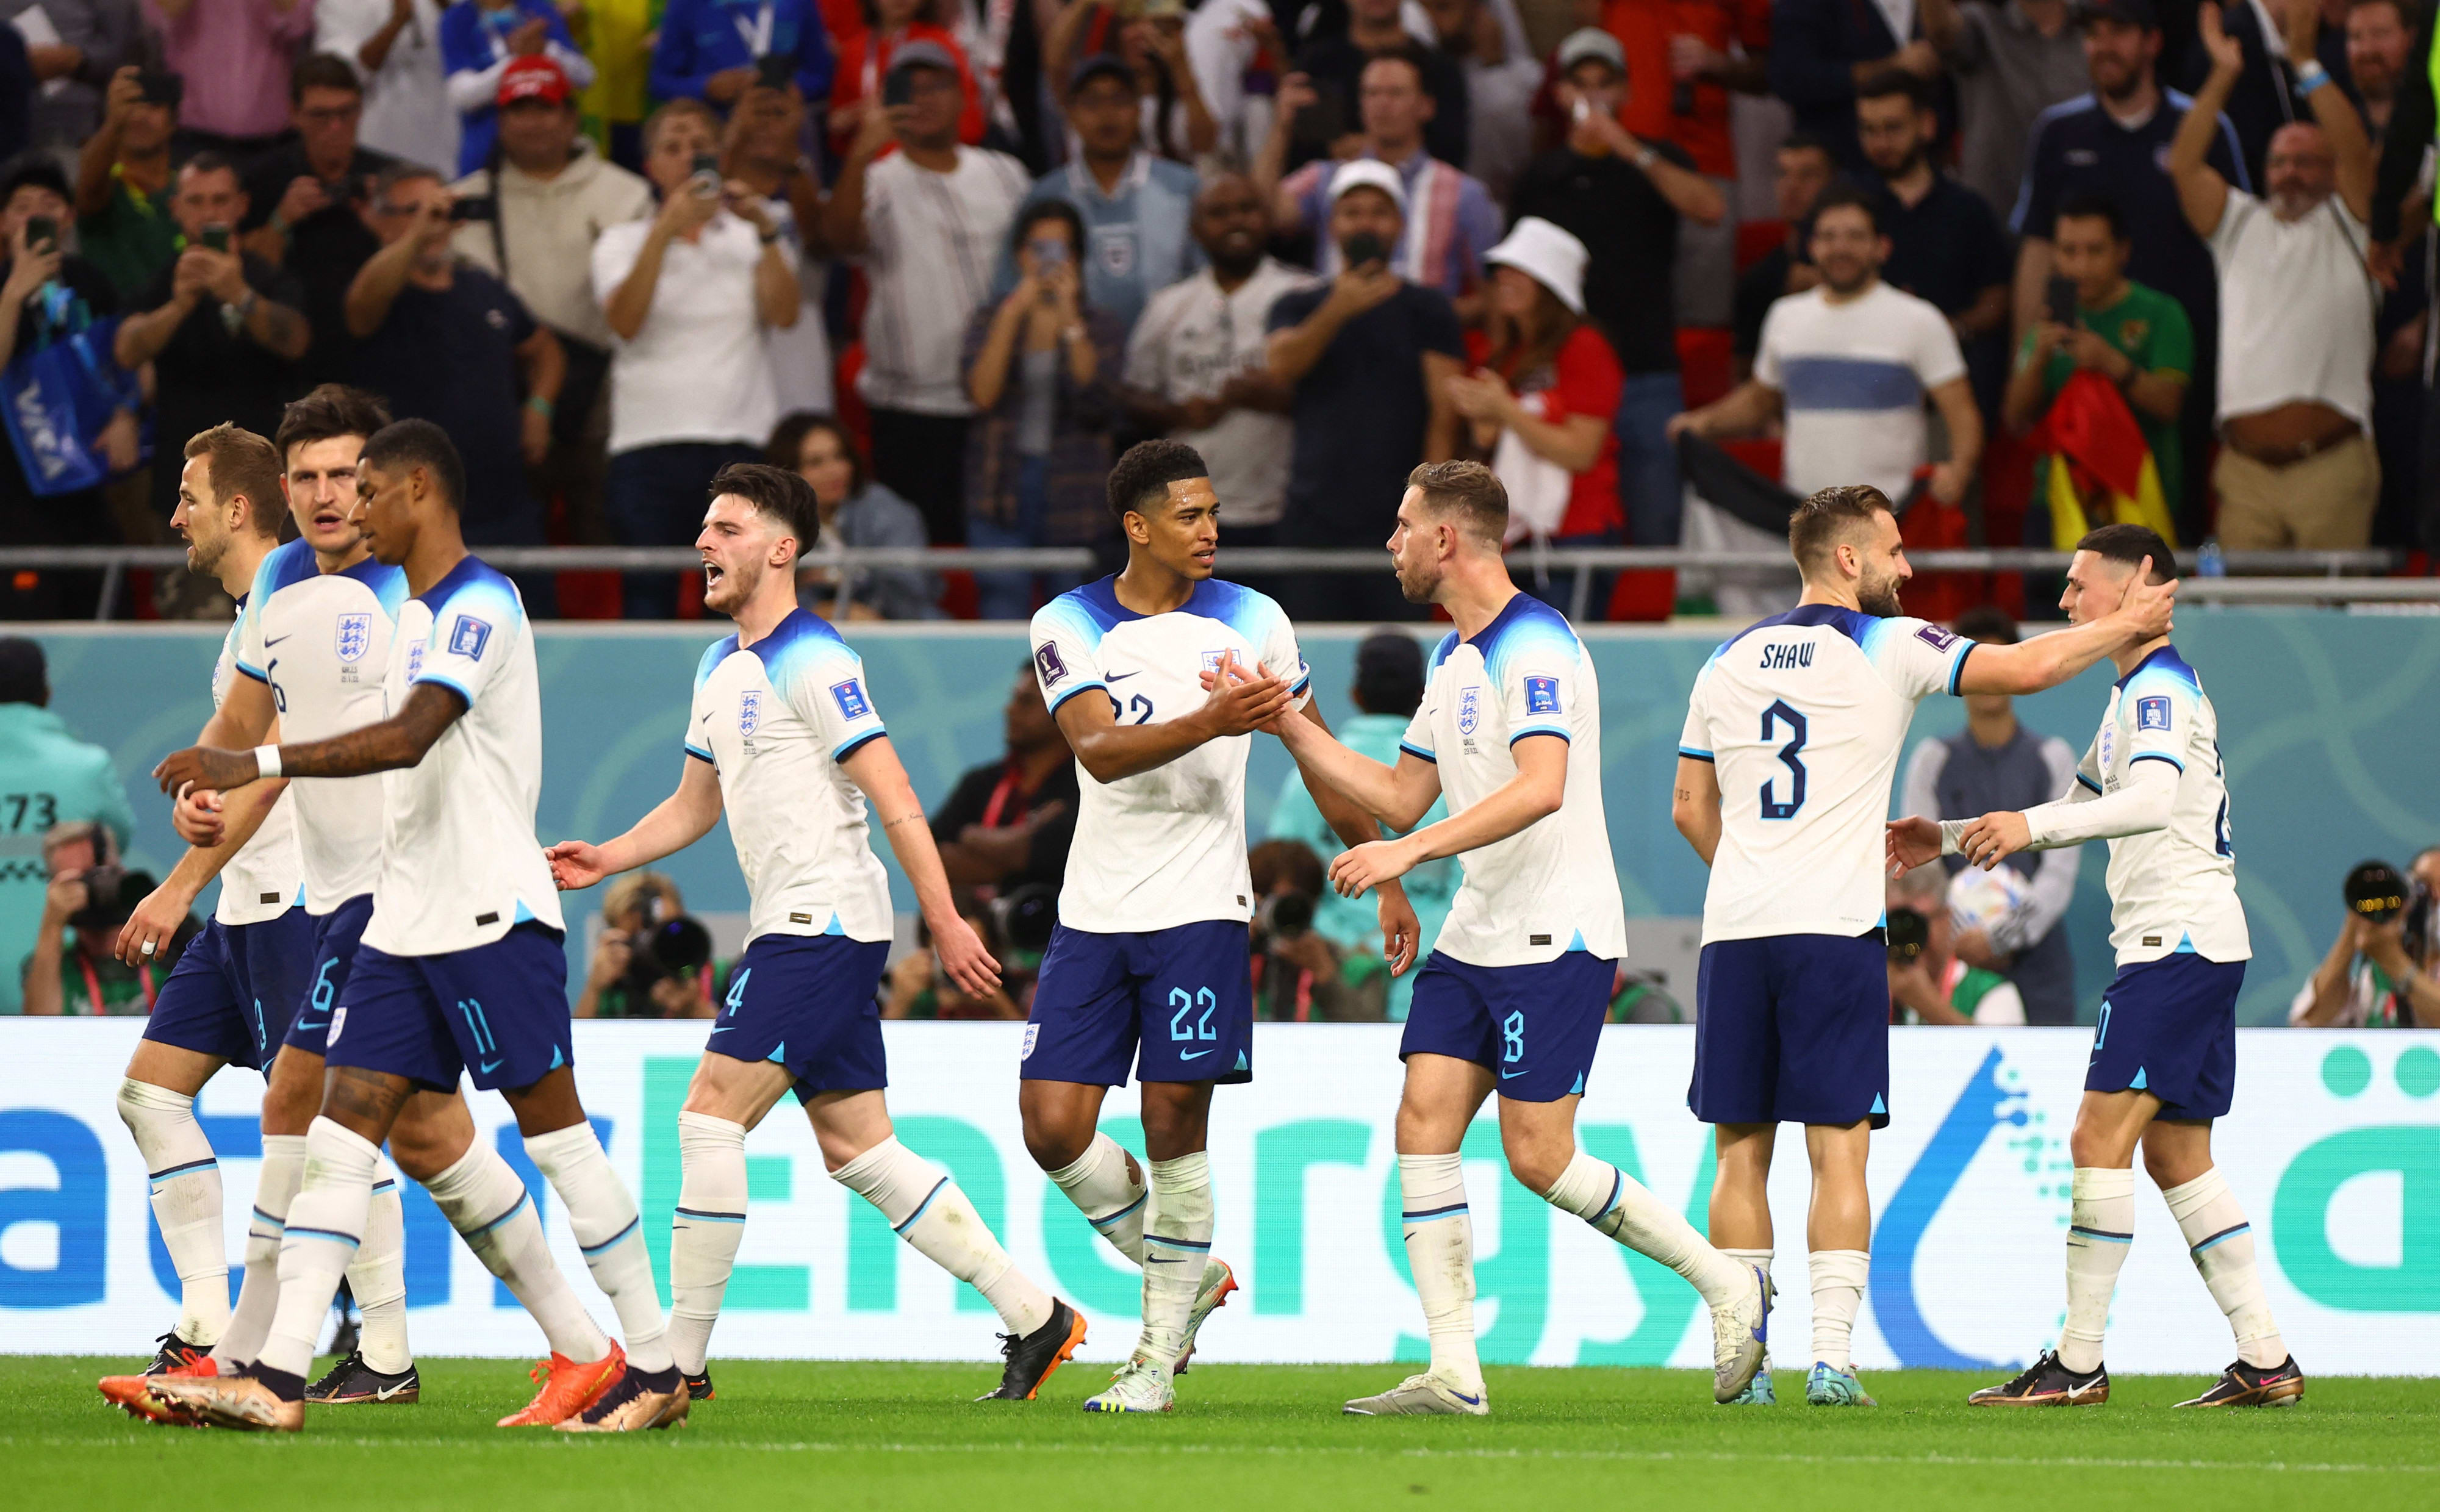 England team players celebrate